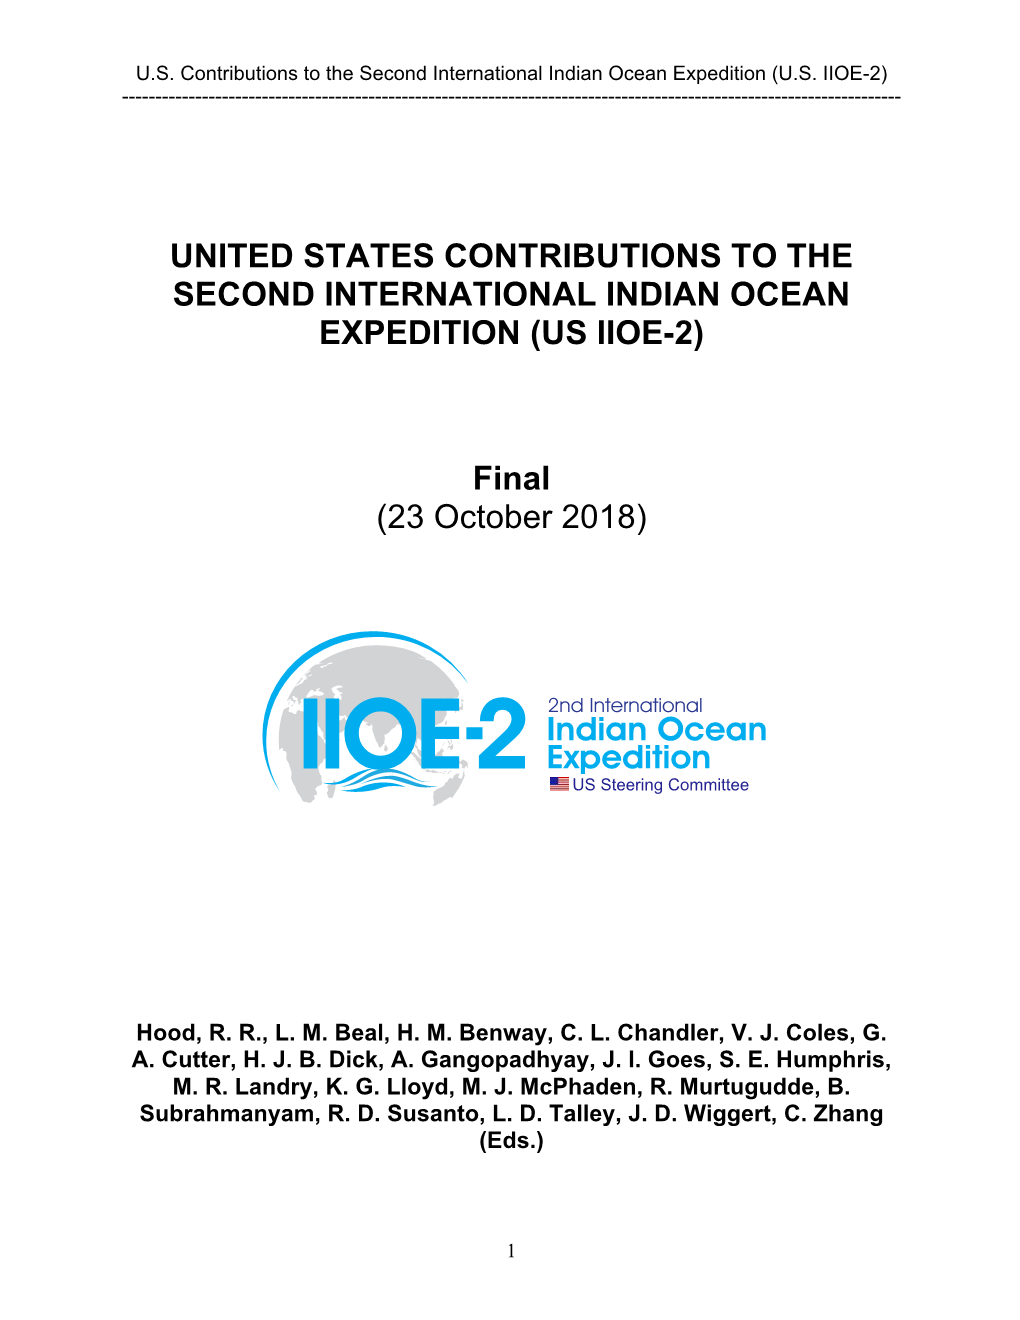 (US IIOE-2) Final